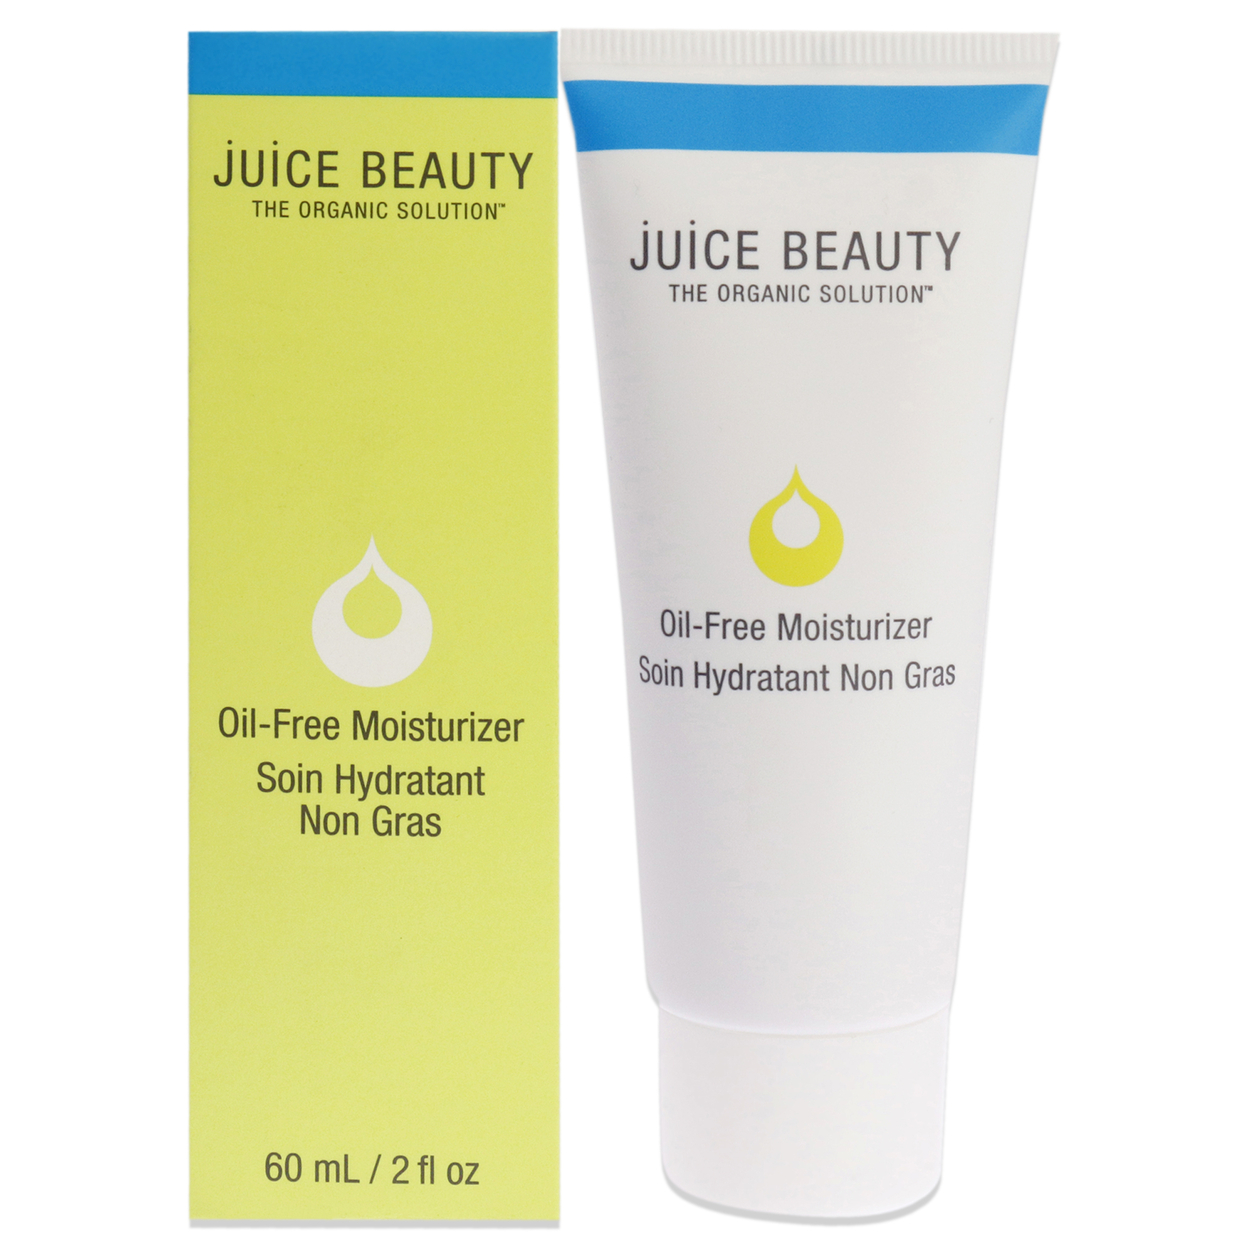 Juice Beauty Oil-Free Moisturizer 2 Oz